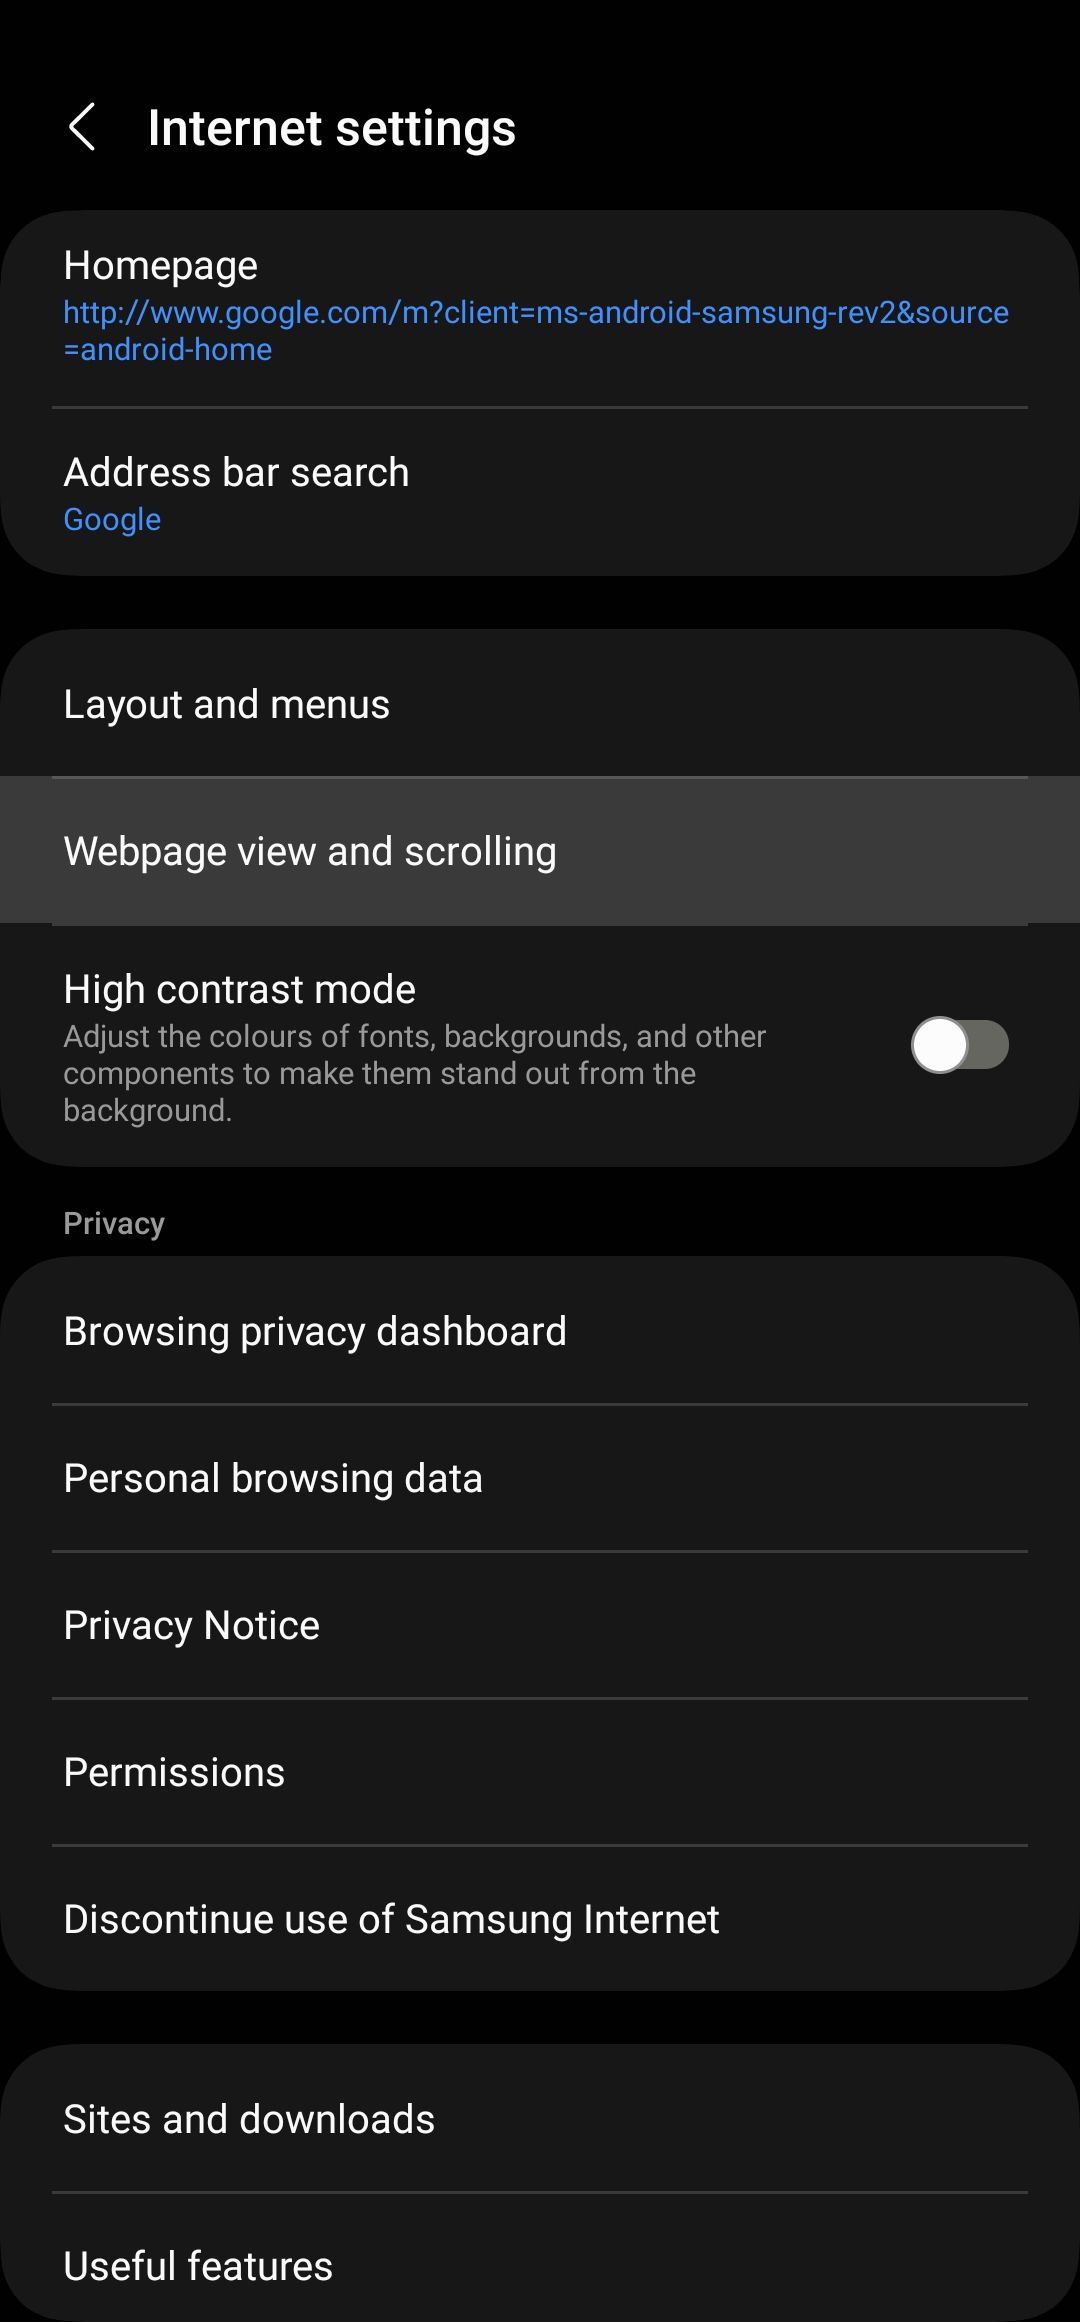 Samsung Internet settings page